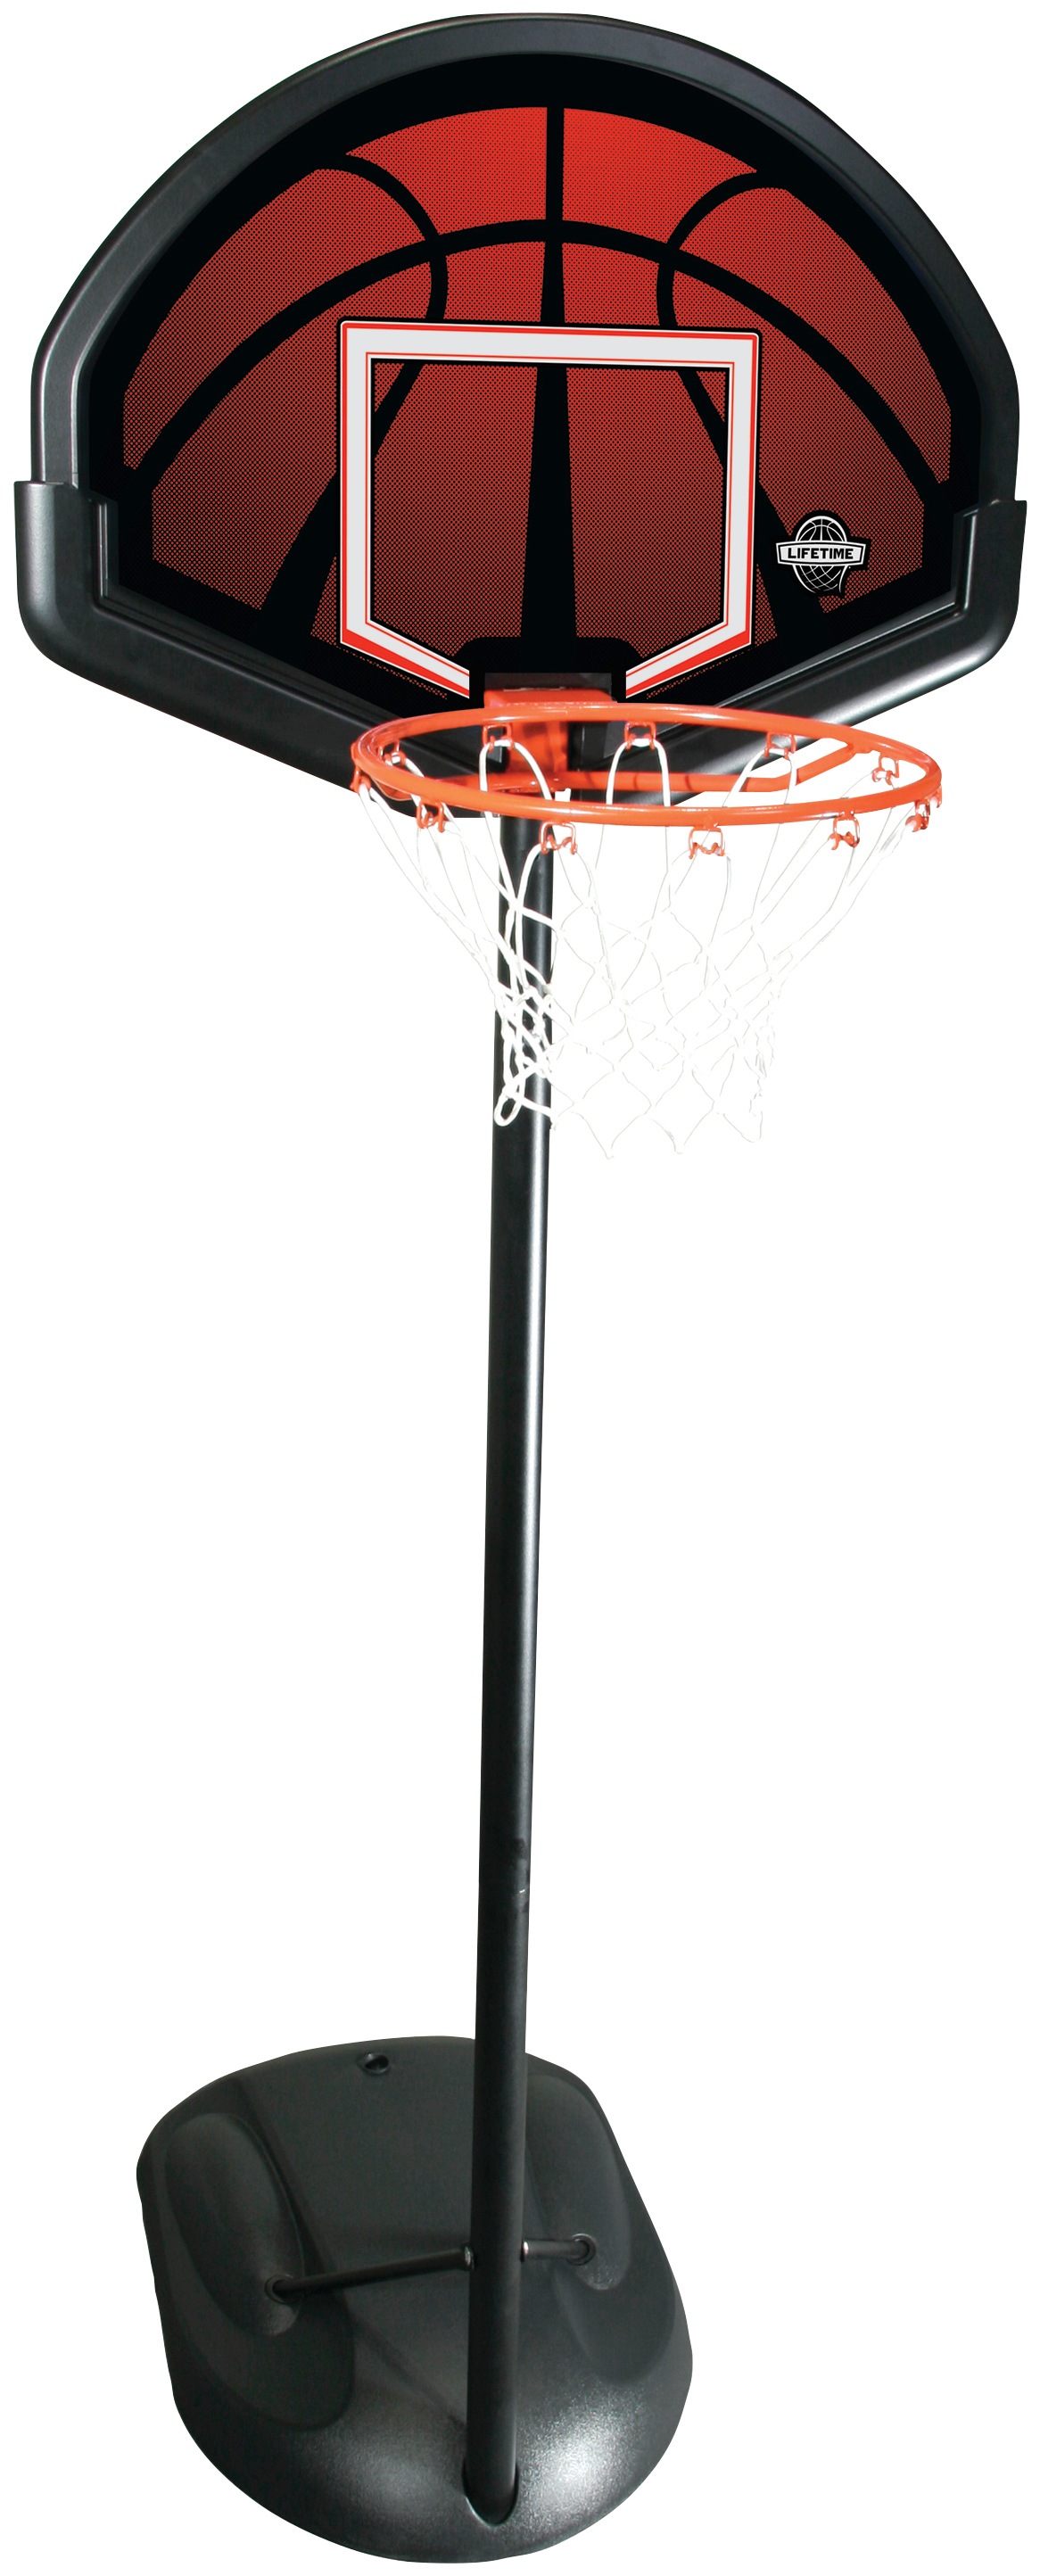 50NRTH Basketballkorb »Alabama«, höhenverstellbar schwarz/rot | BAUR